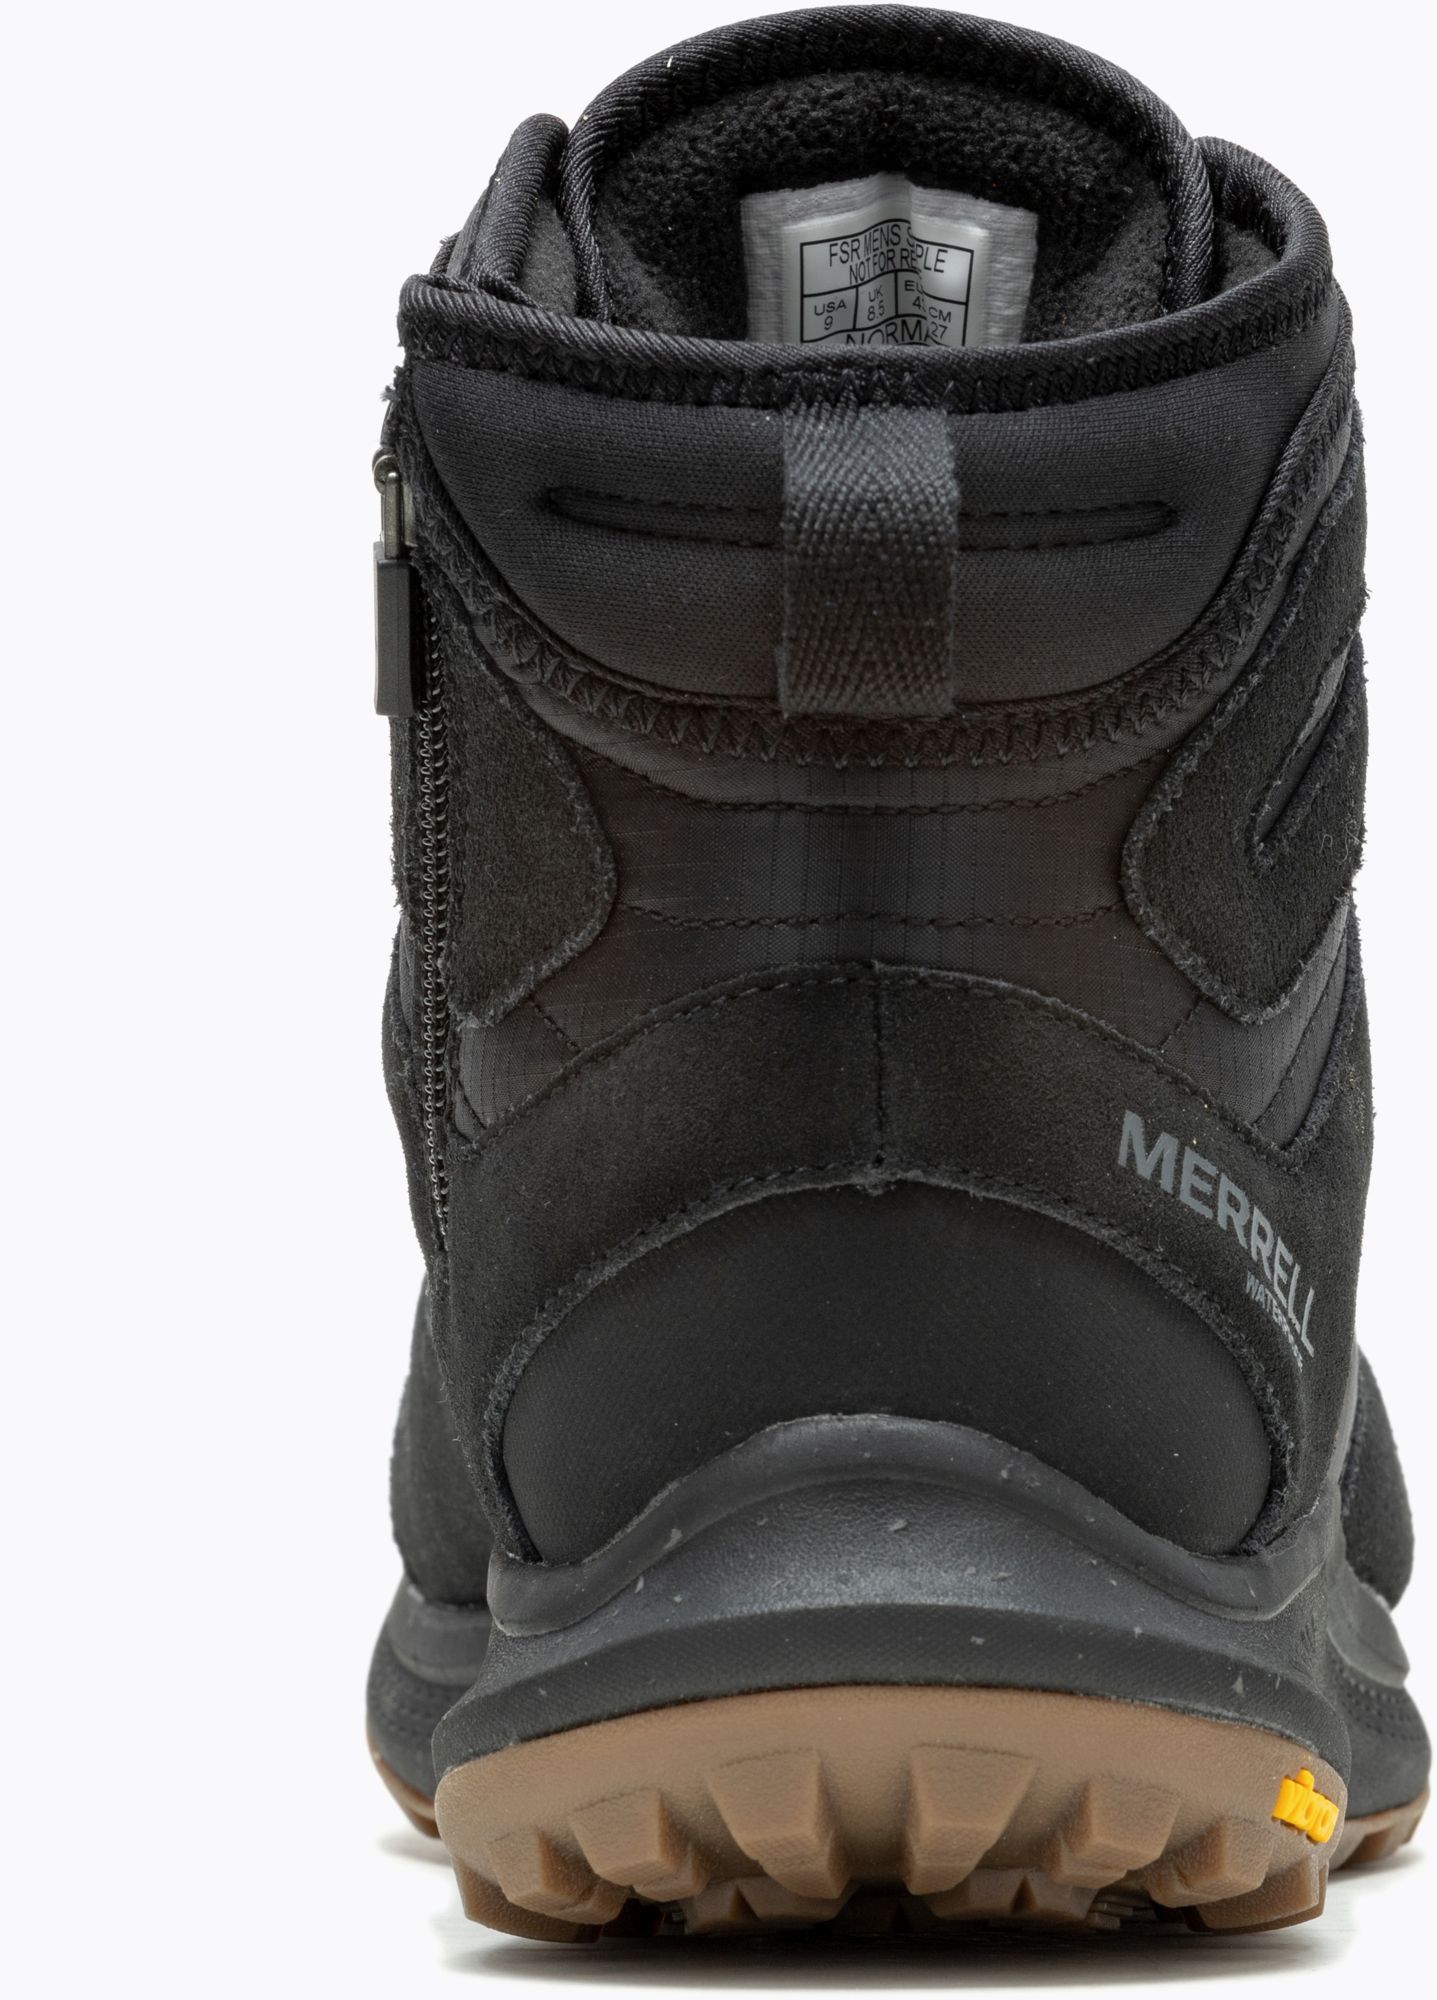 Merrell Men's Nova 3 Mid 100g Waterproof Hiking Boots